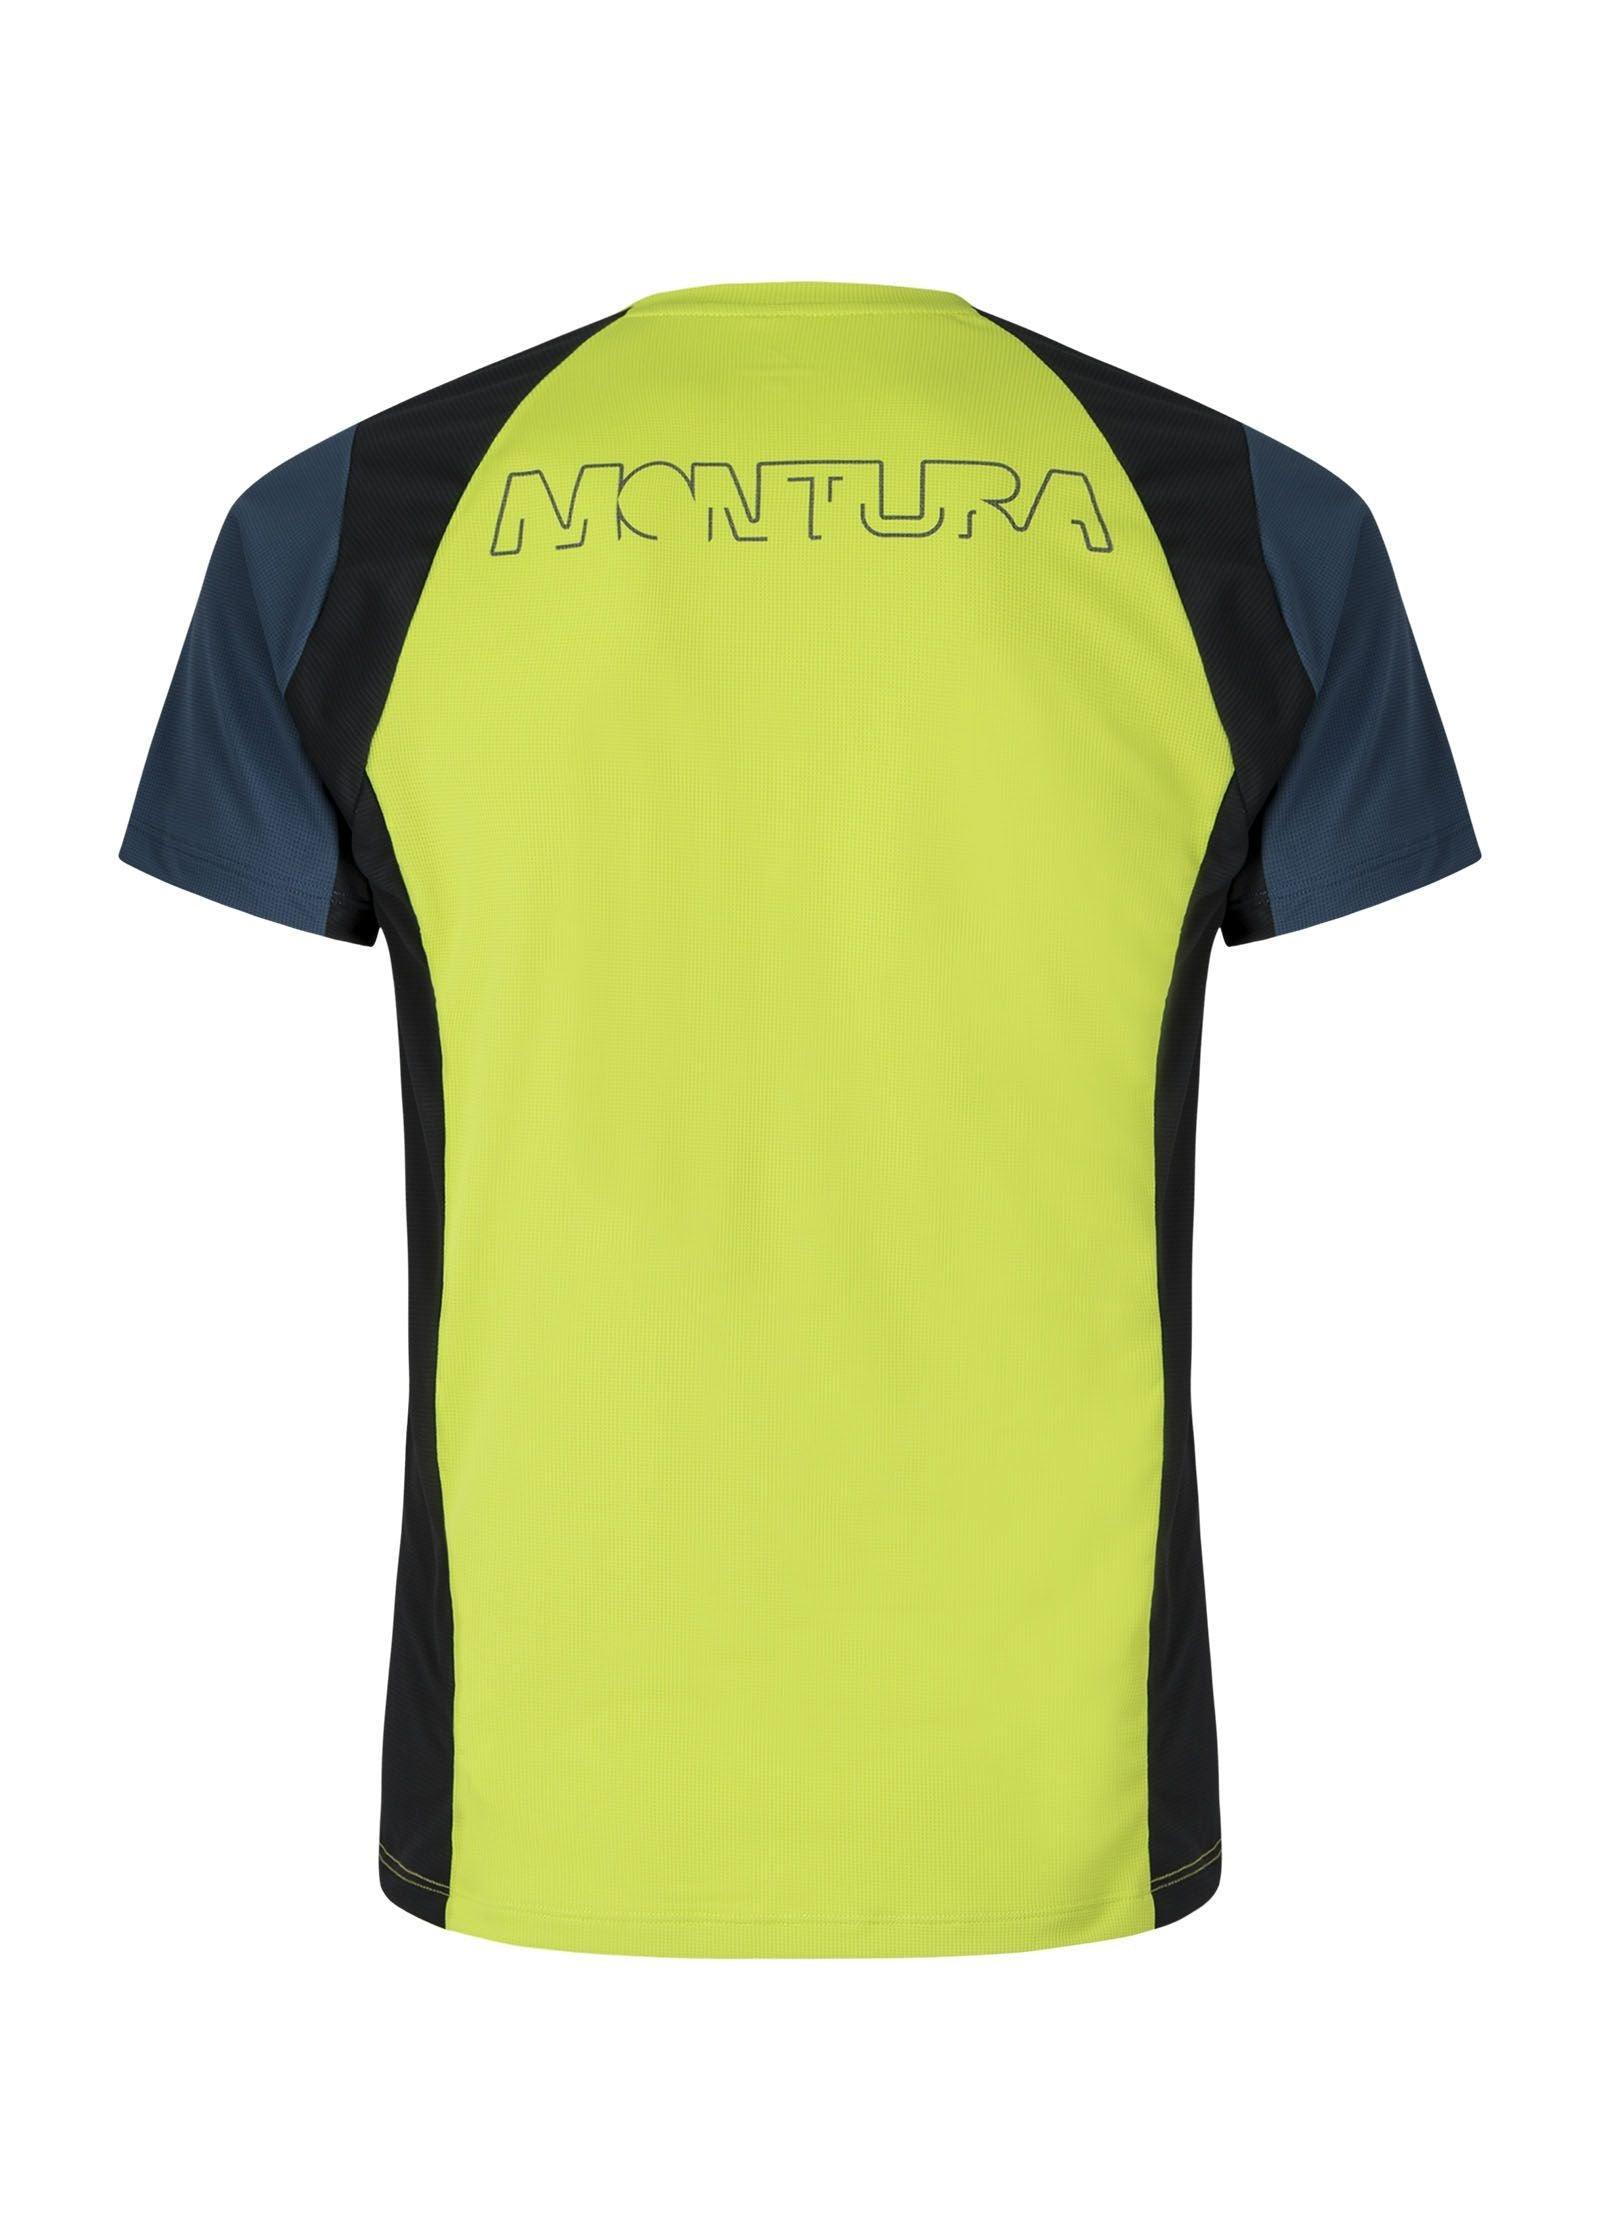 Montura | T-shirt Outdoor Choice Uomo Verde Lime/Blu Cenere - Fabbrica Ski Sises